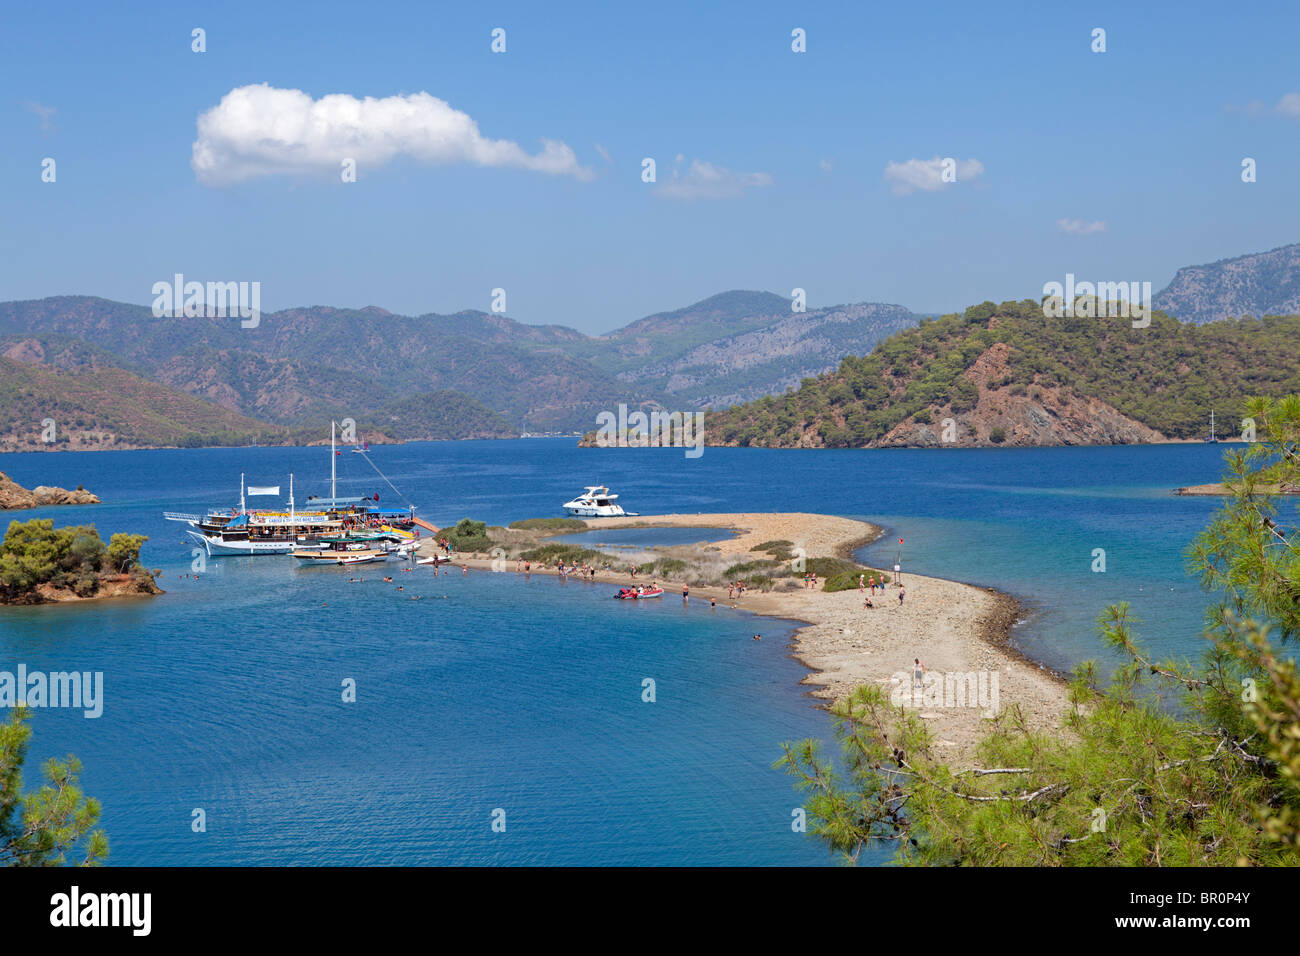 excursion boats, Yassica Island (Flat Island), Turkish Aegean Sea, Turkey Stock Photo